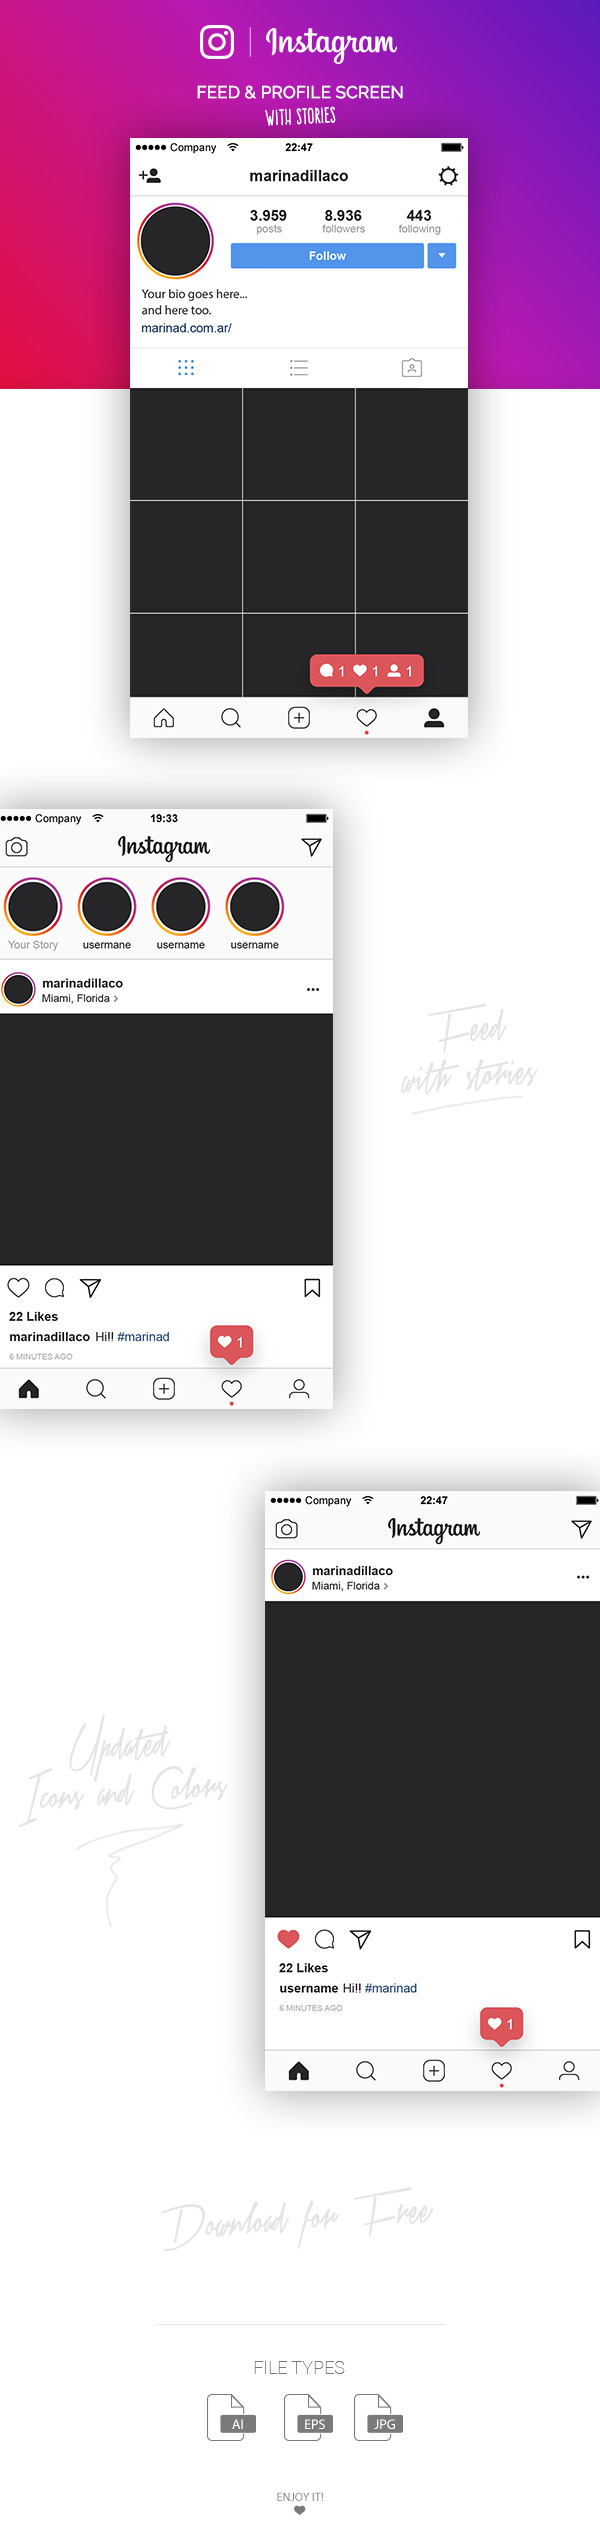 instagram Layout screen Mockup Stories feed UI free freebie download